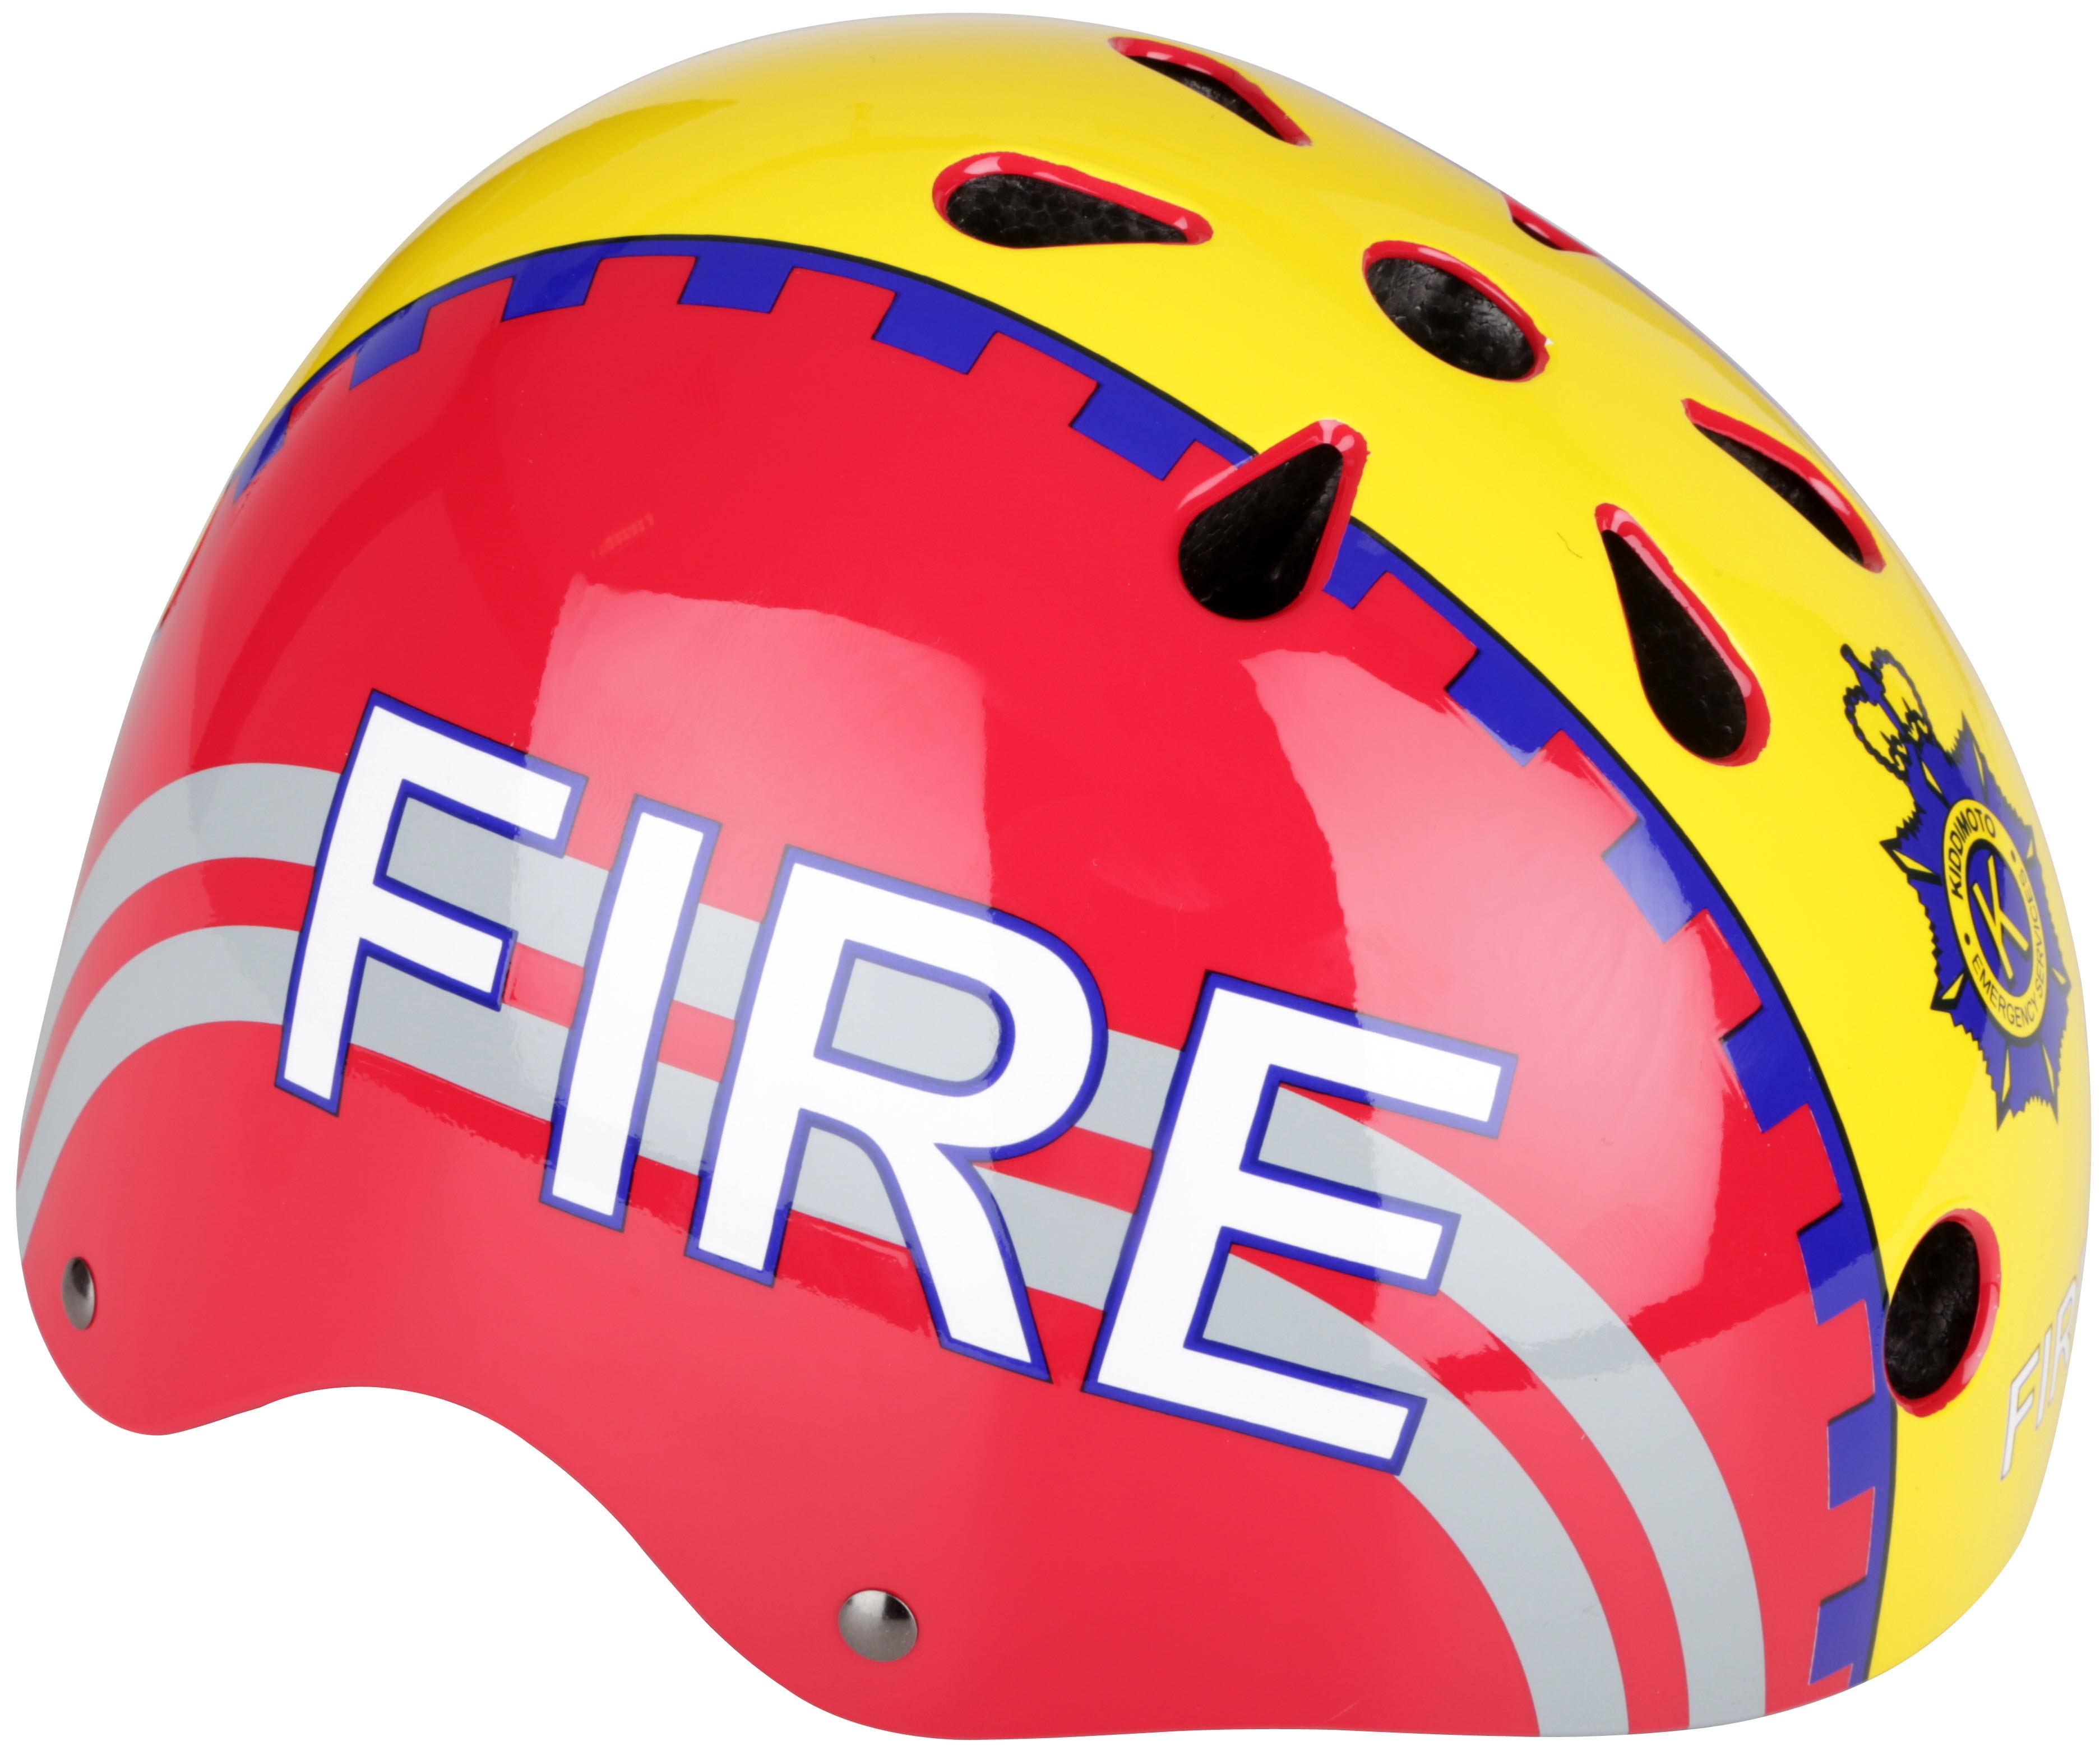 Kiddimoto Fire Kids Helmet - Small (48-53Cm)